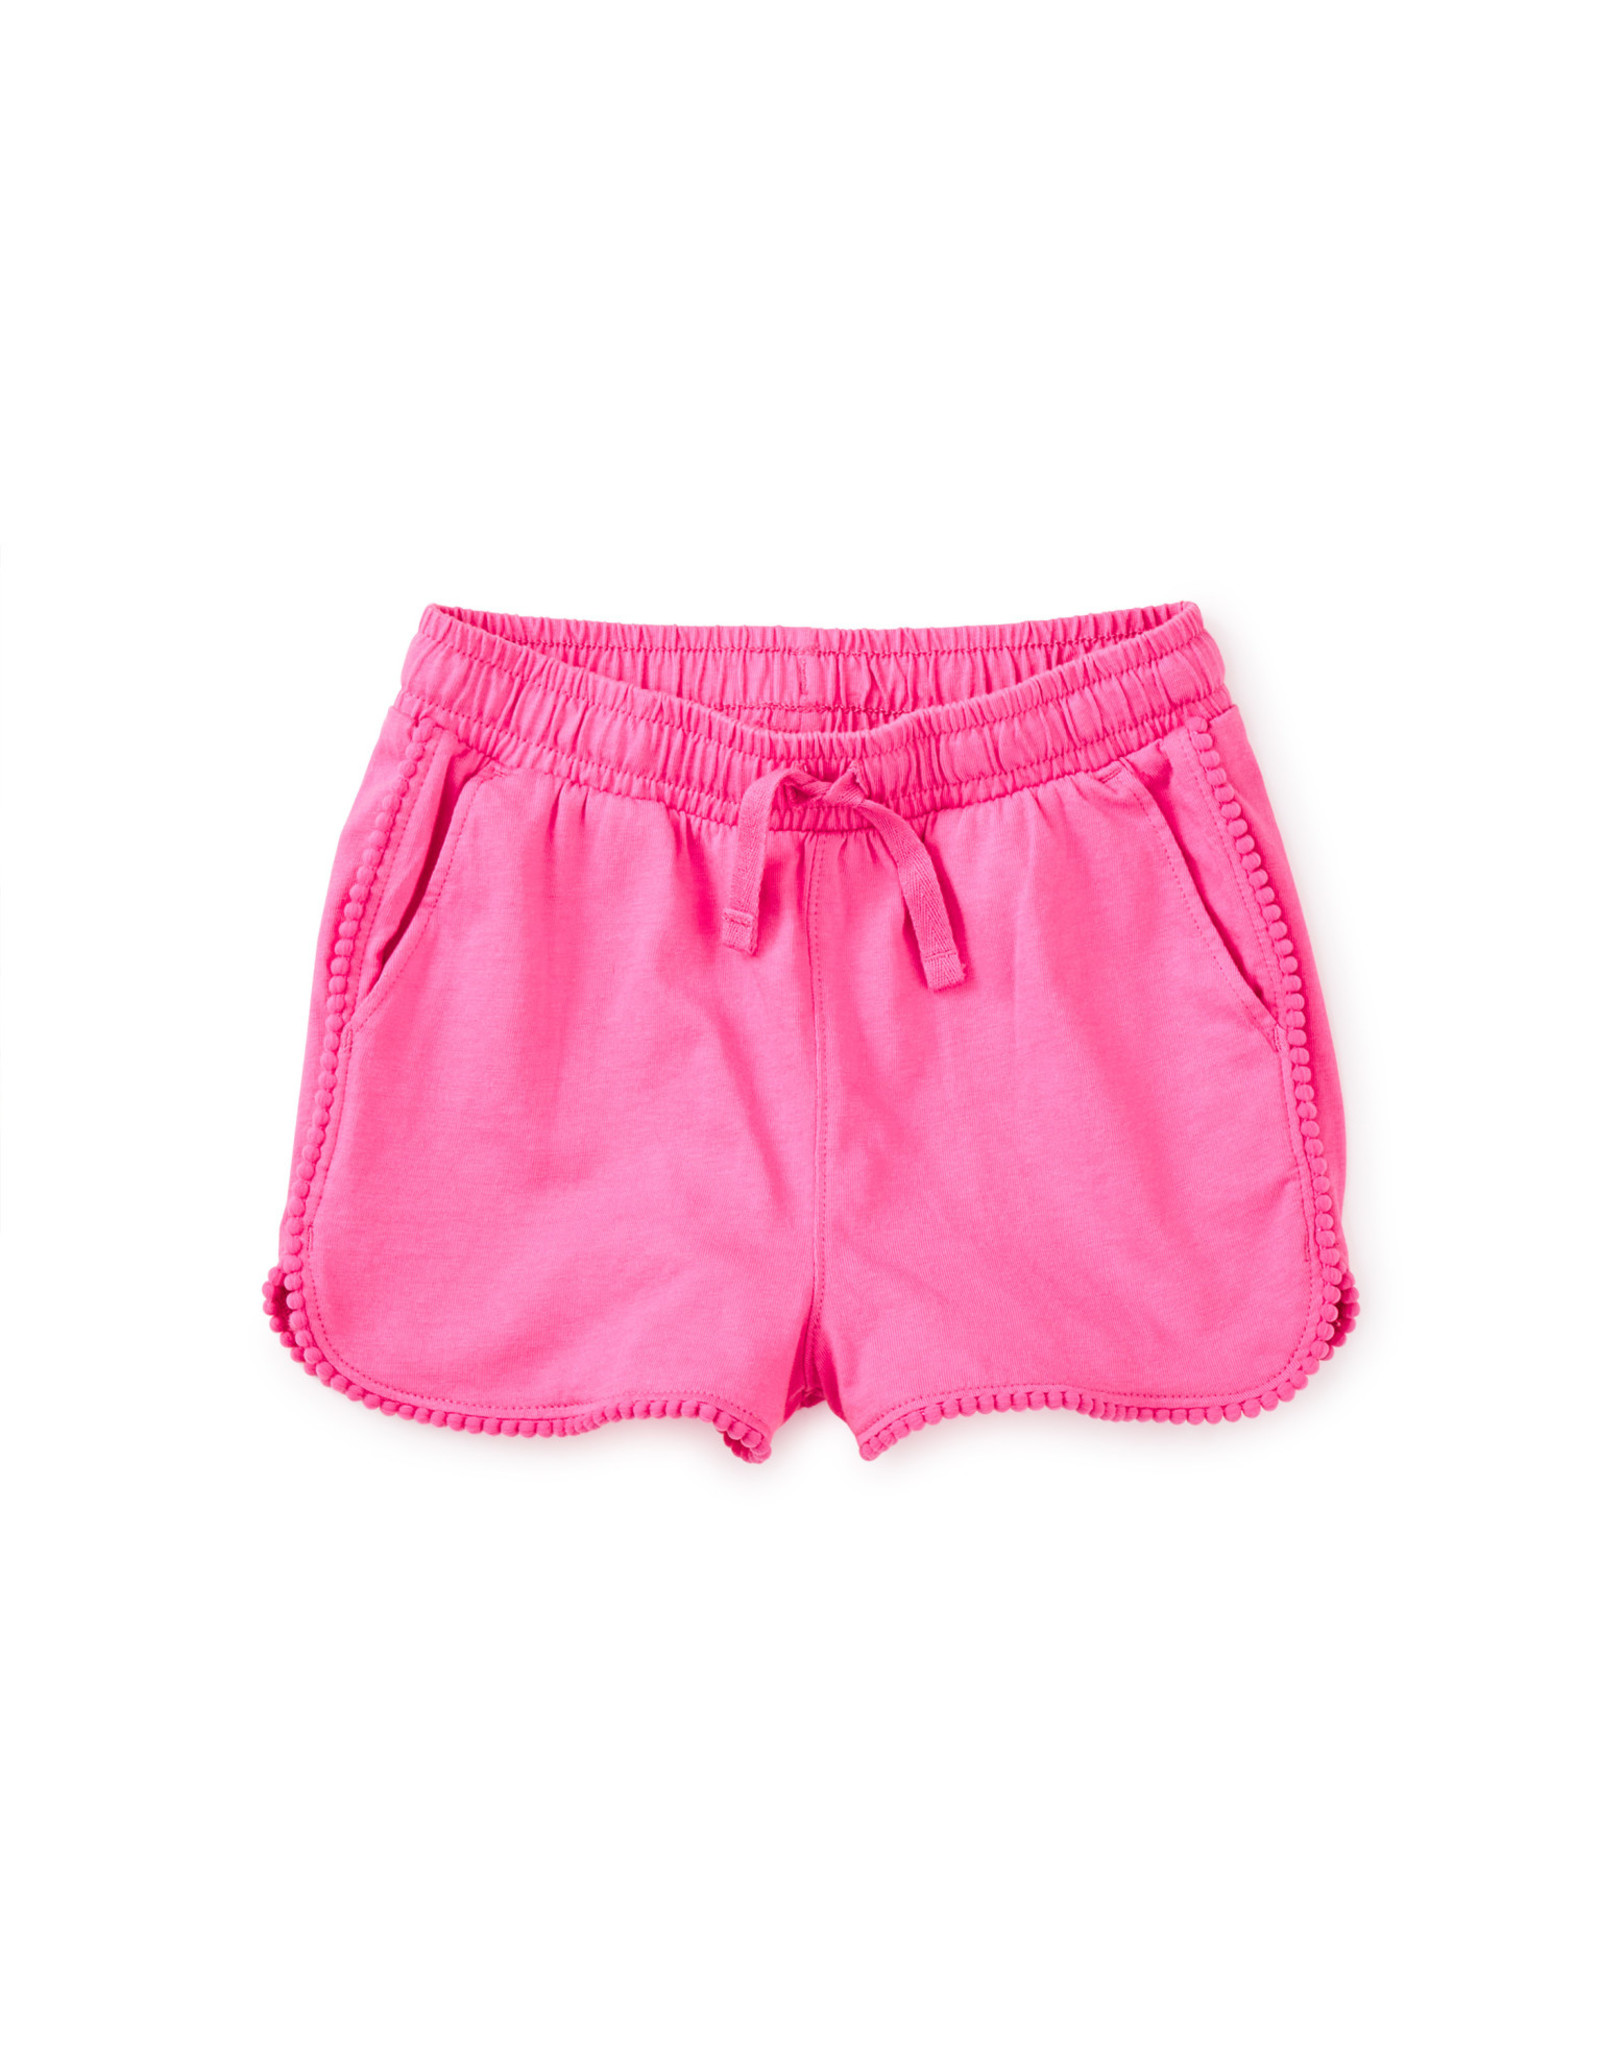 Tea Pom-Pom Gym Shorts, Carousel pink - Glee Kids